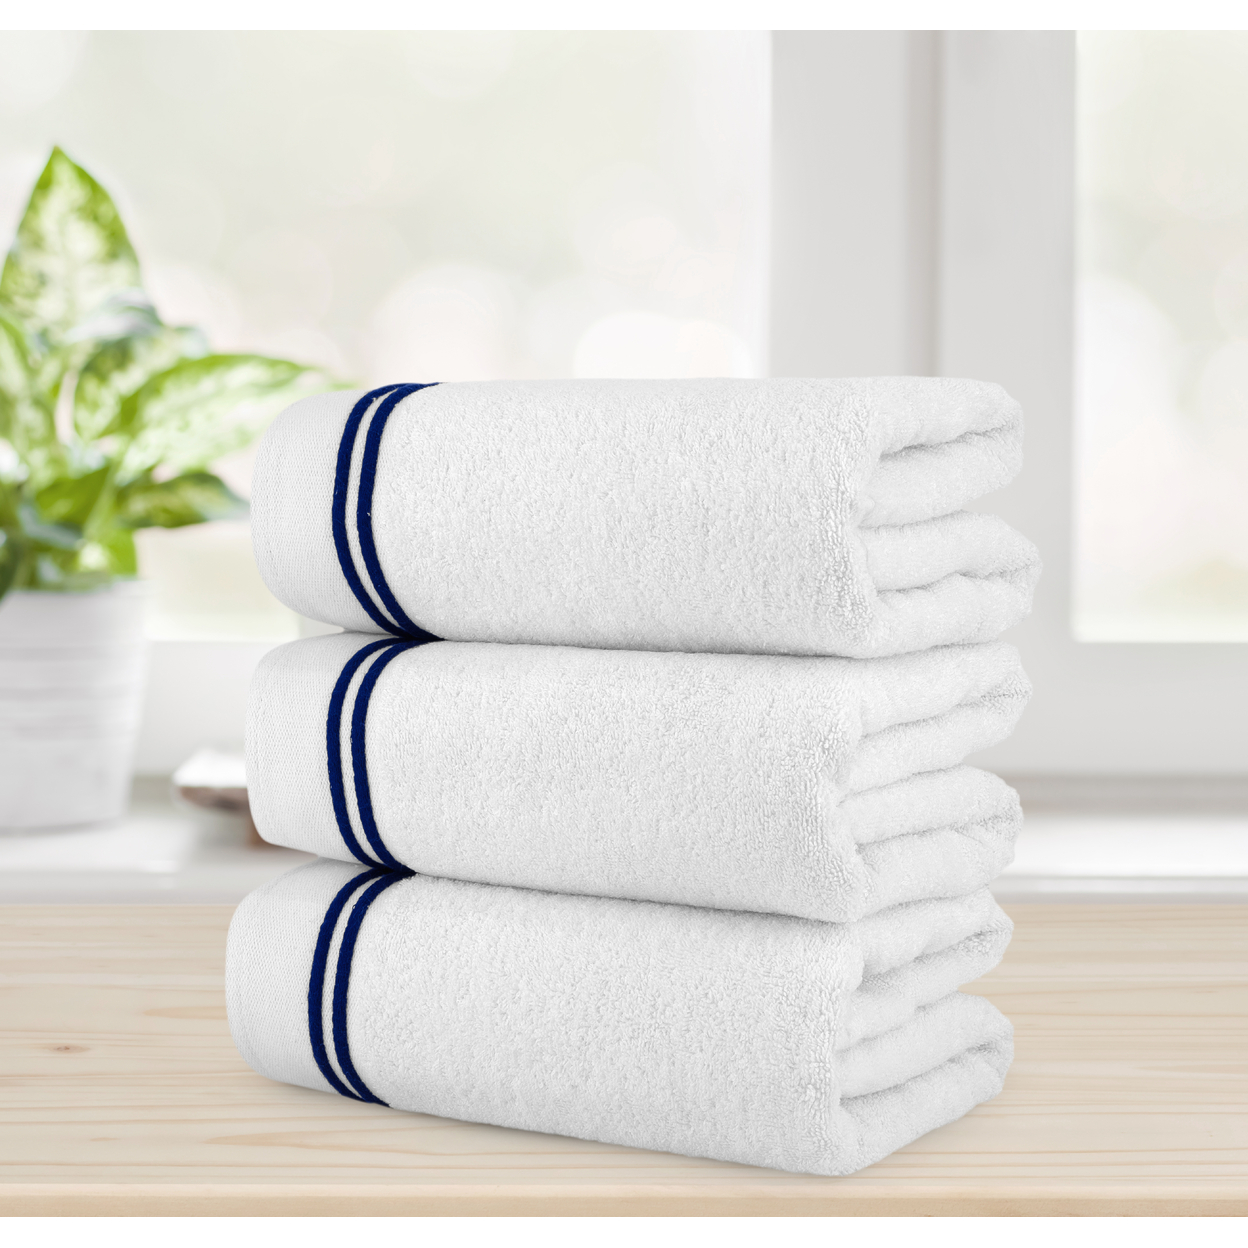 Chic Home Luxurious 3-Piece 100% Pure Turkish Cotton White Bath Towels, 30 X 60, Striped Hem, OEKO-TEX Certified Set - White-navy